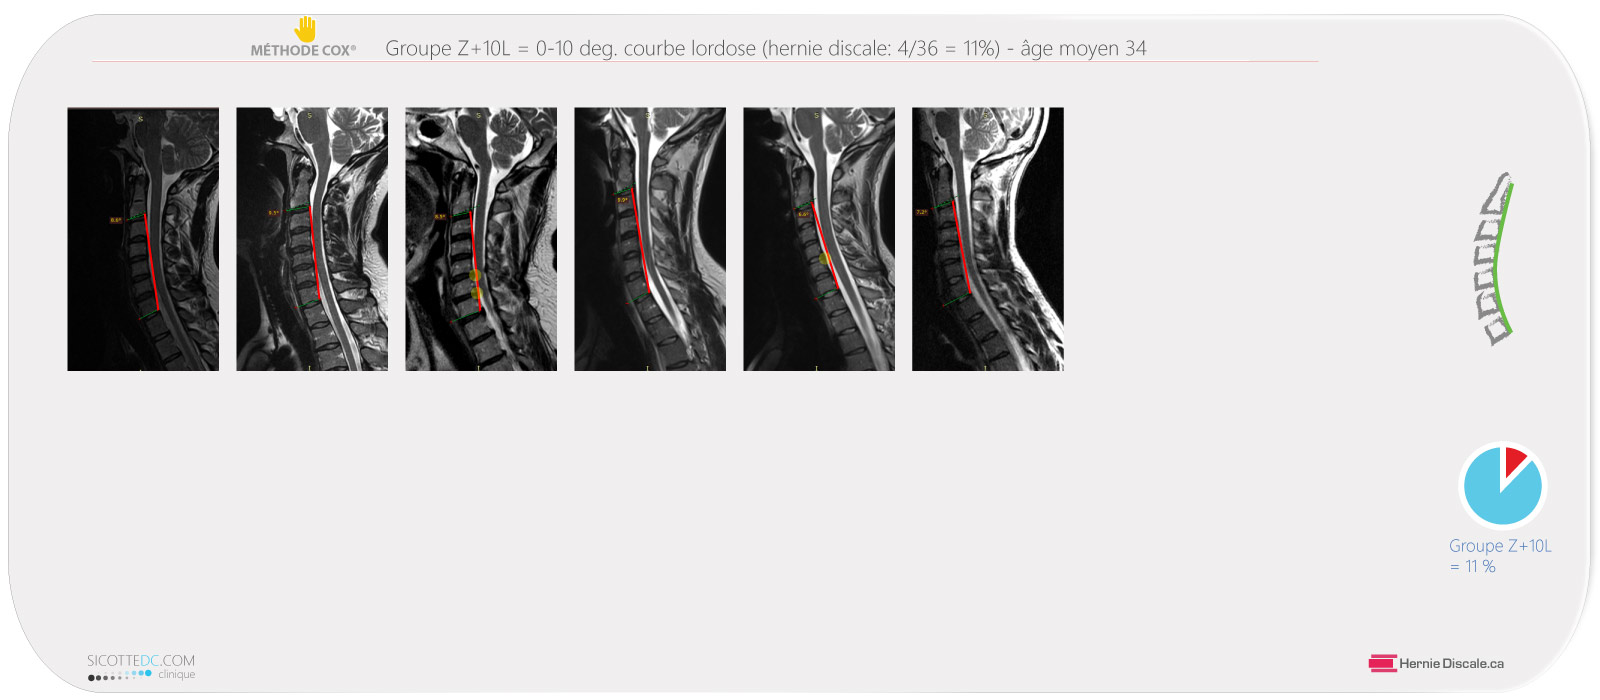 Comparaison IRM hernie discale #3